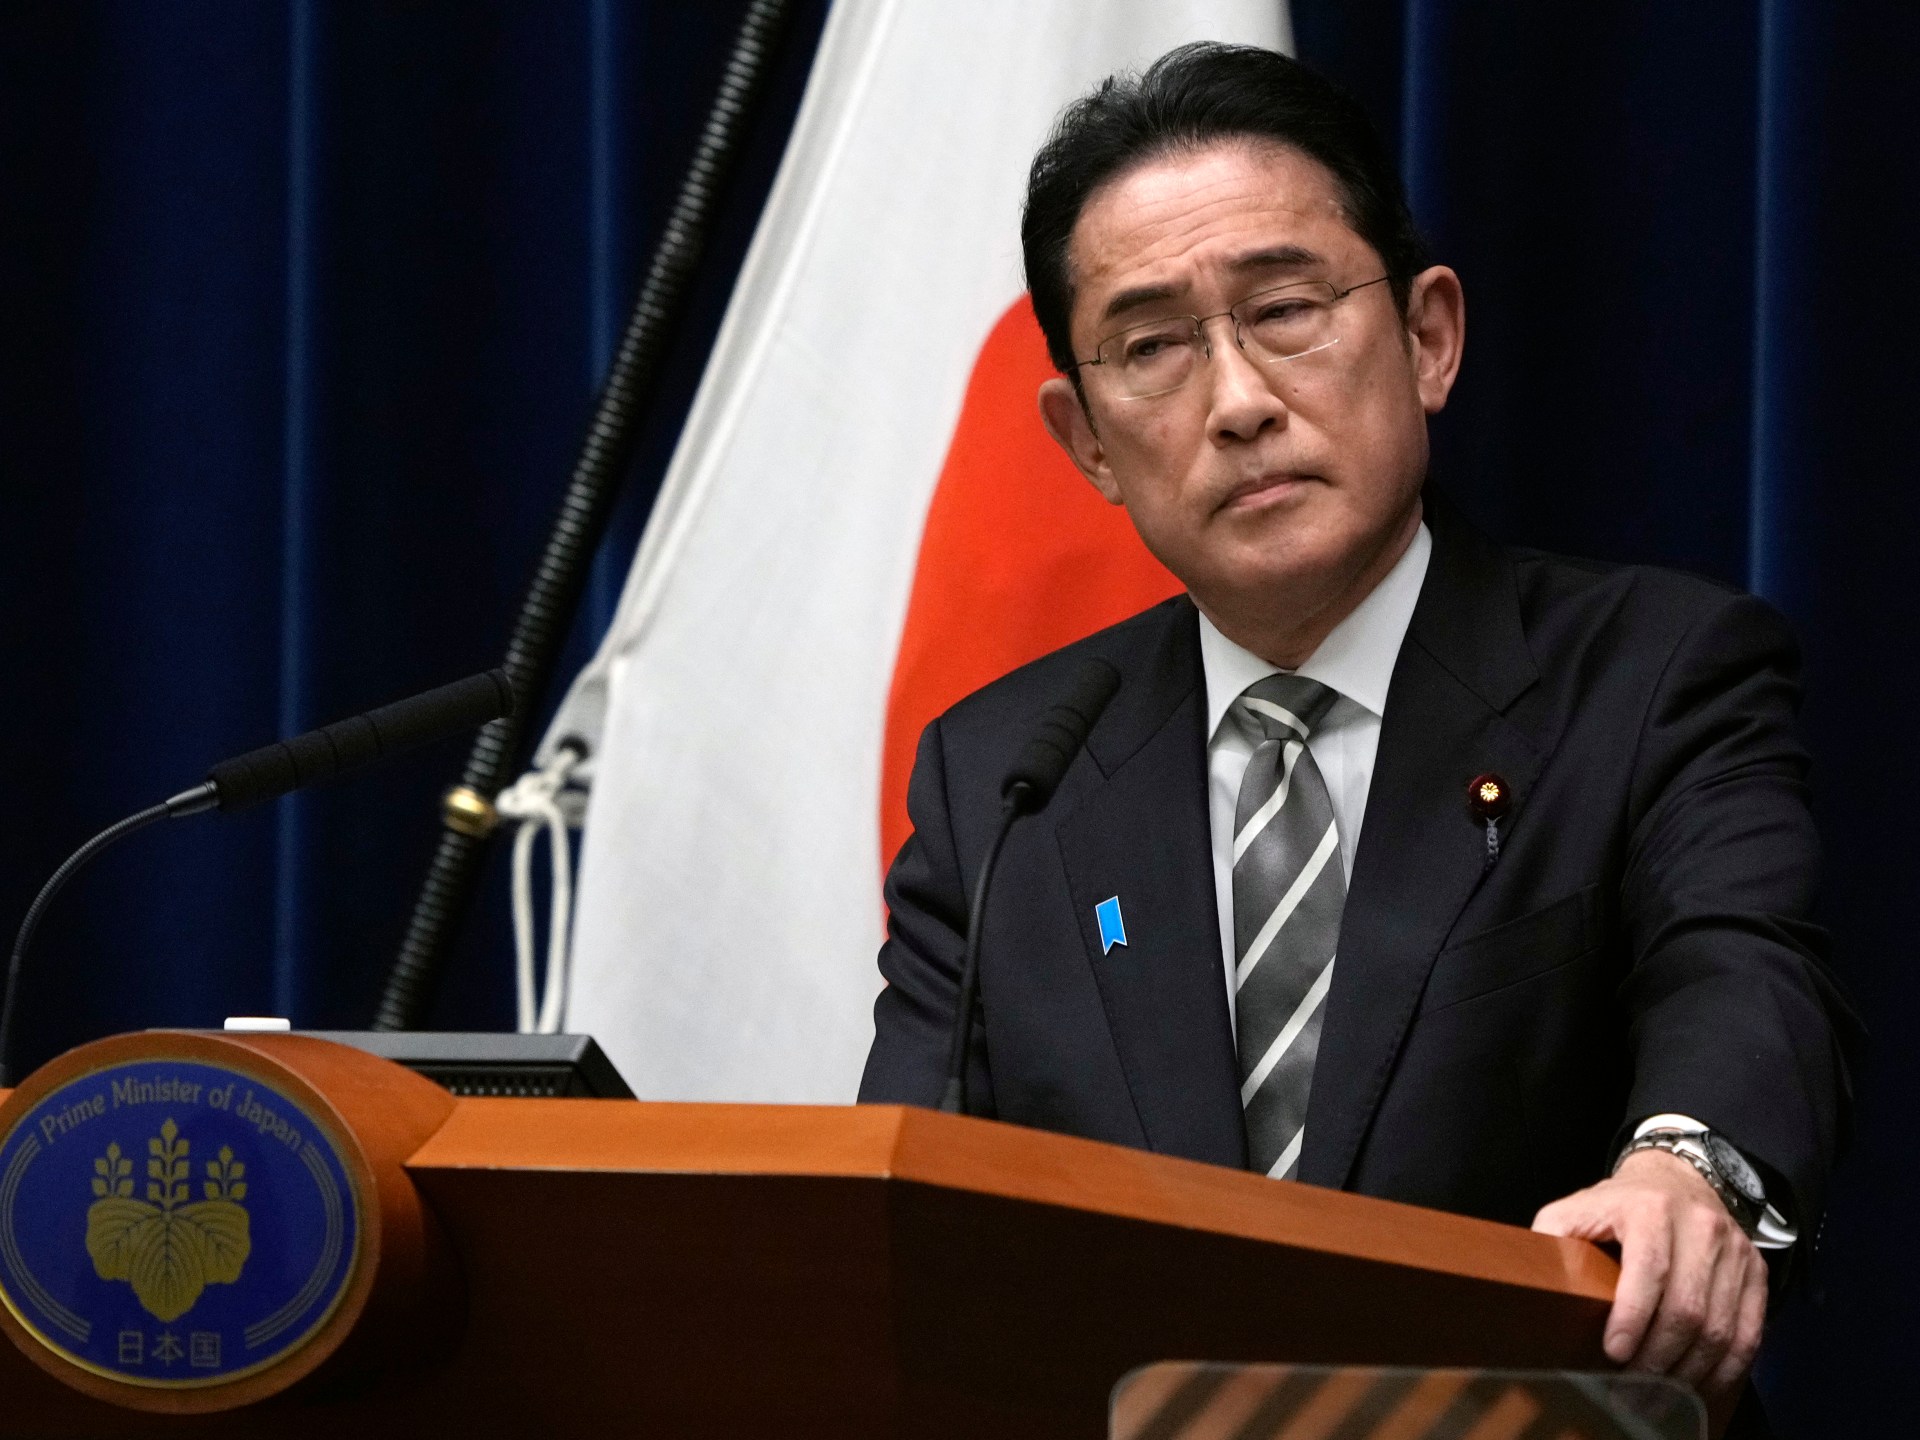 Ministers quit as Japan’s PM Kishida battles for trust amid fraud scandal | Politics News #Ministers #quit #Japans #Kishida #battles #trust #fraud #scandal #Politics #News